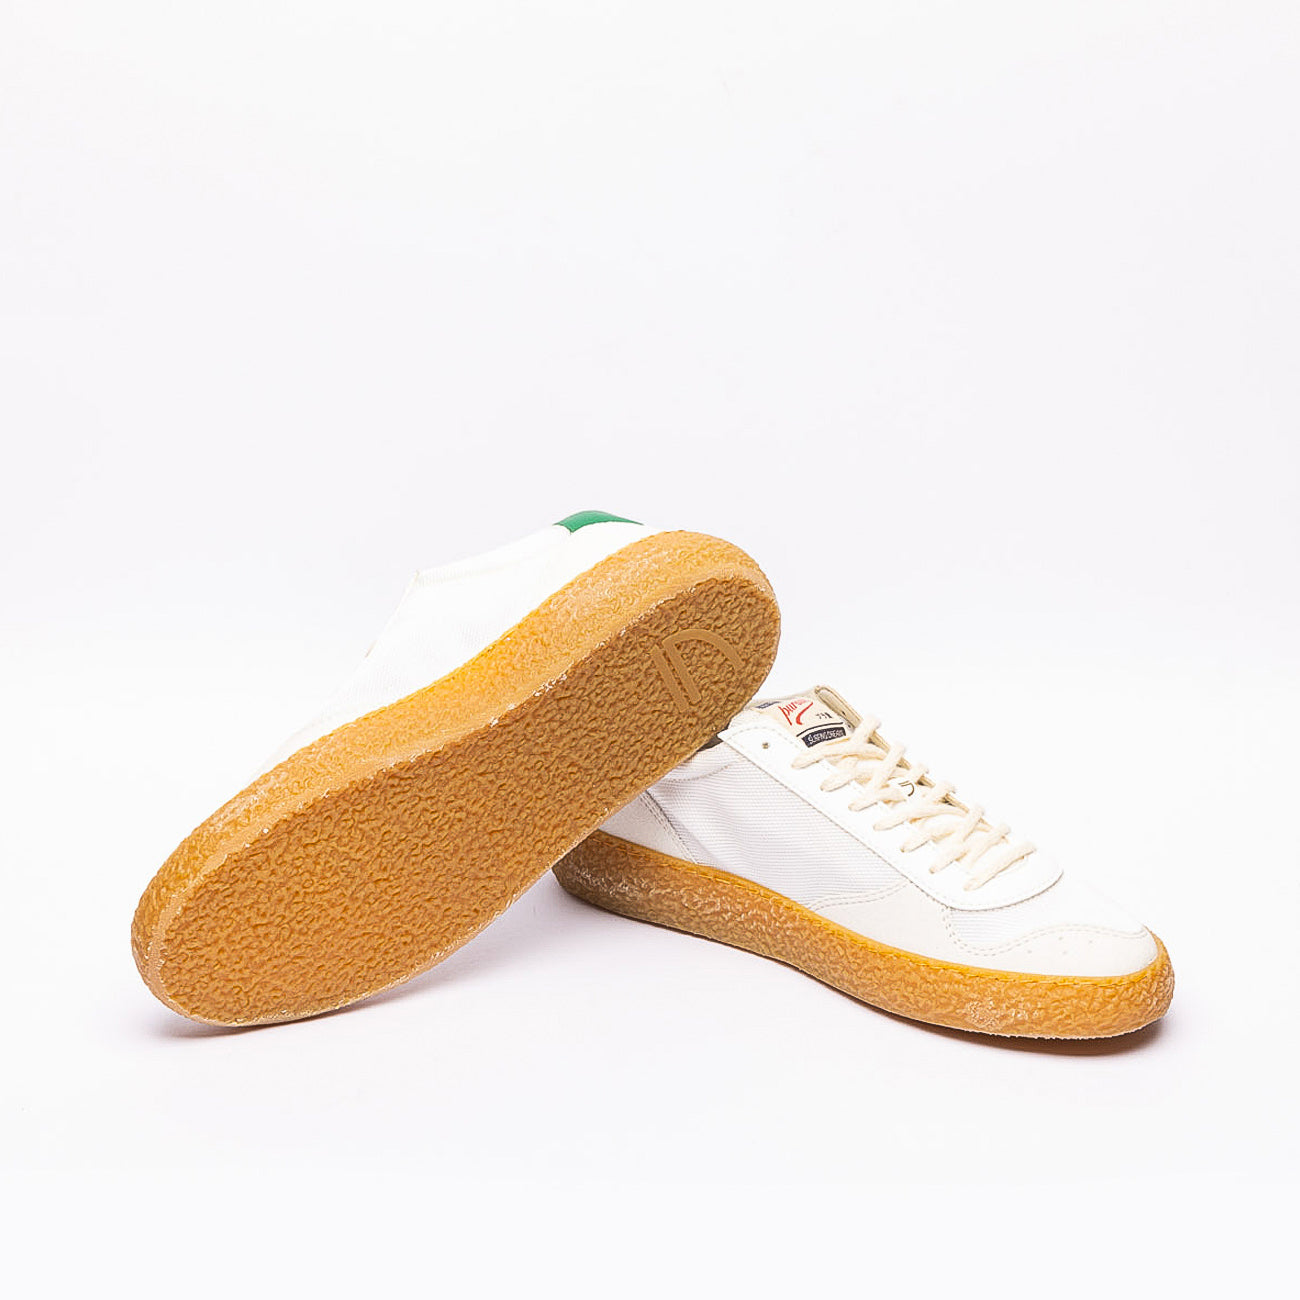 Sneaker Puraai 4.05 Polly Evergreen in tessuto bianco e logo verde